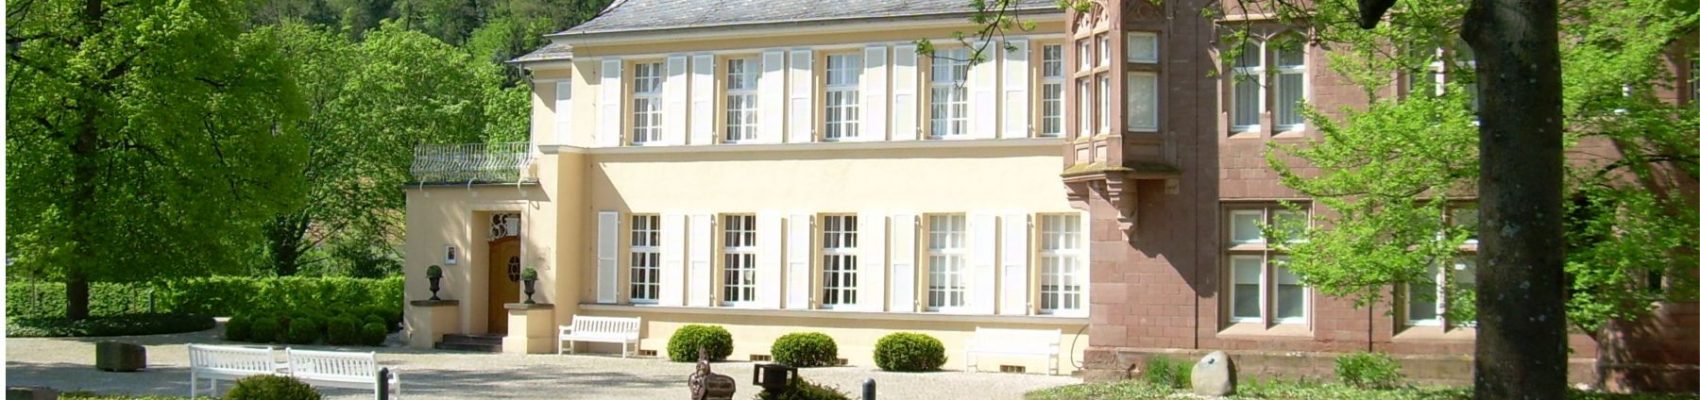 Sehenswürdigkeiten in Merzig: Museum Schloss Fellenberg – Musée du Château Fellenberg